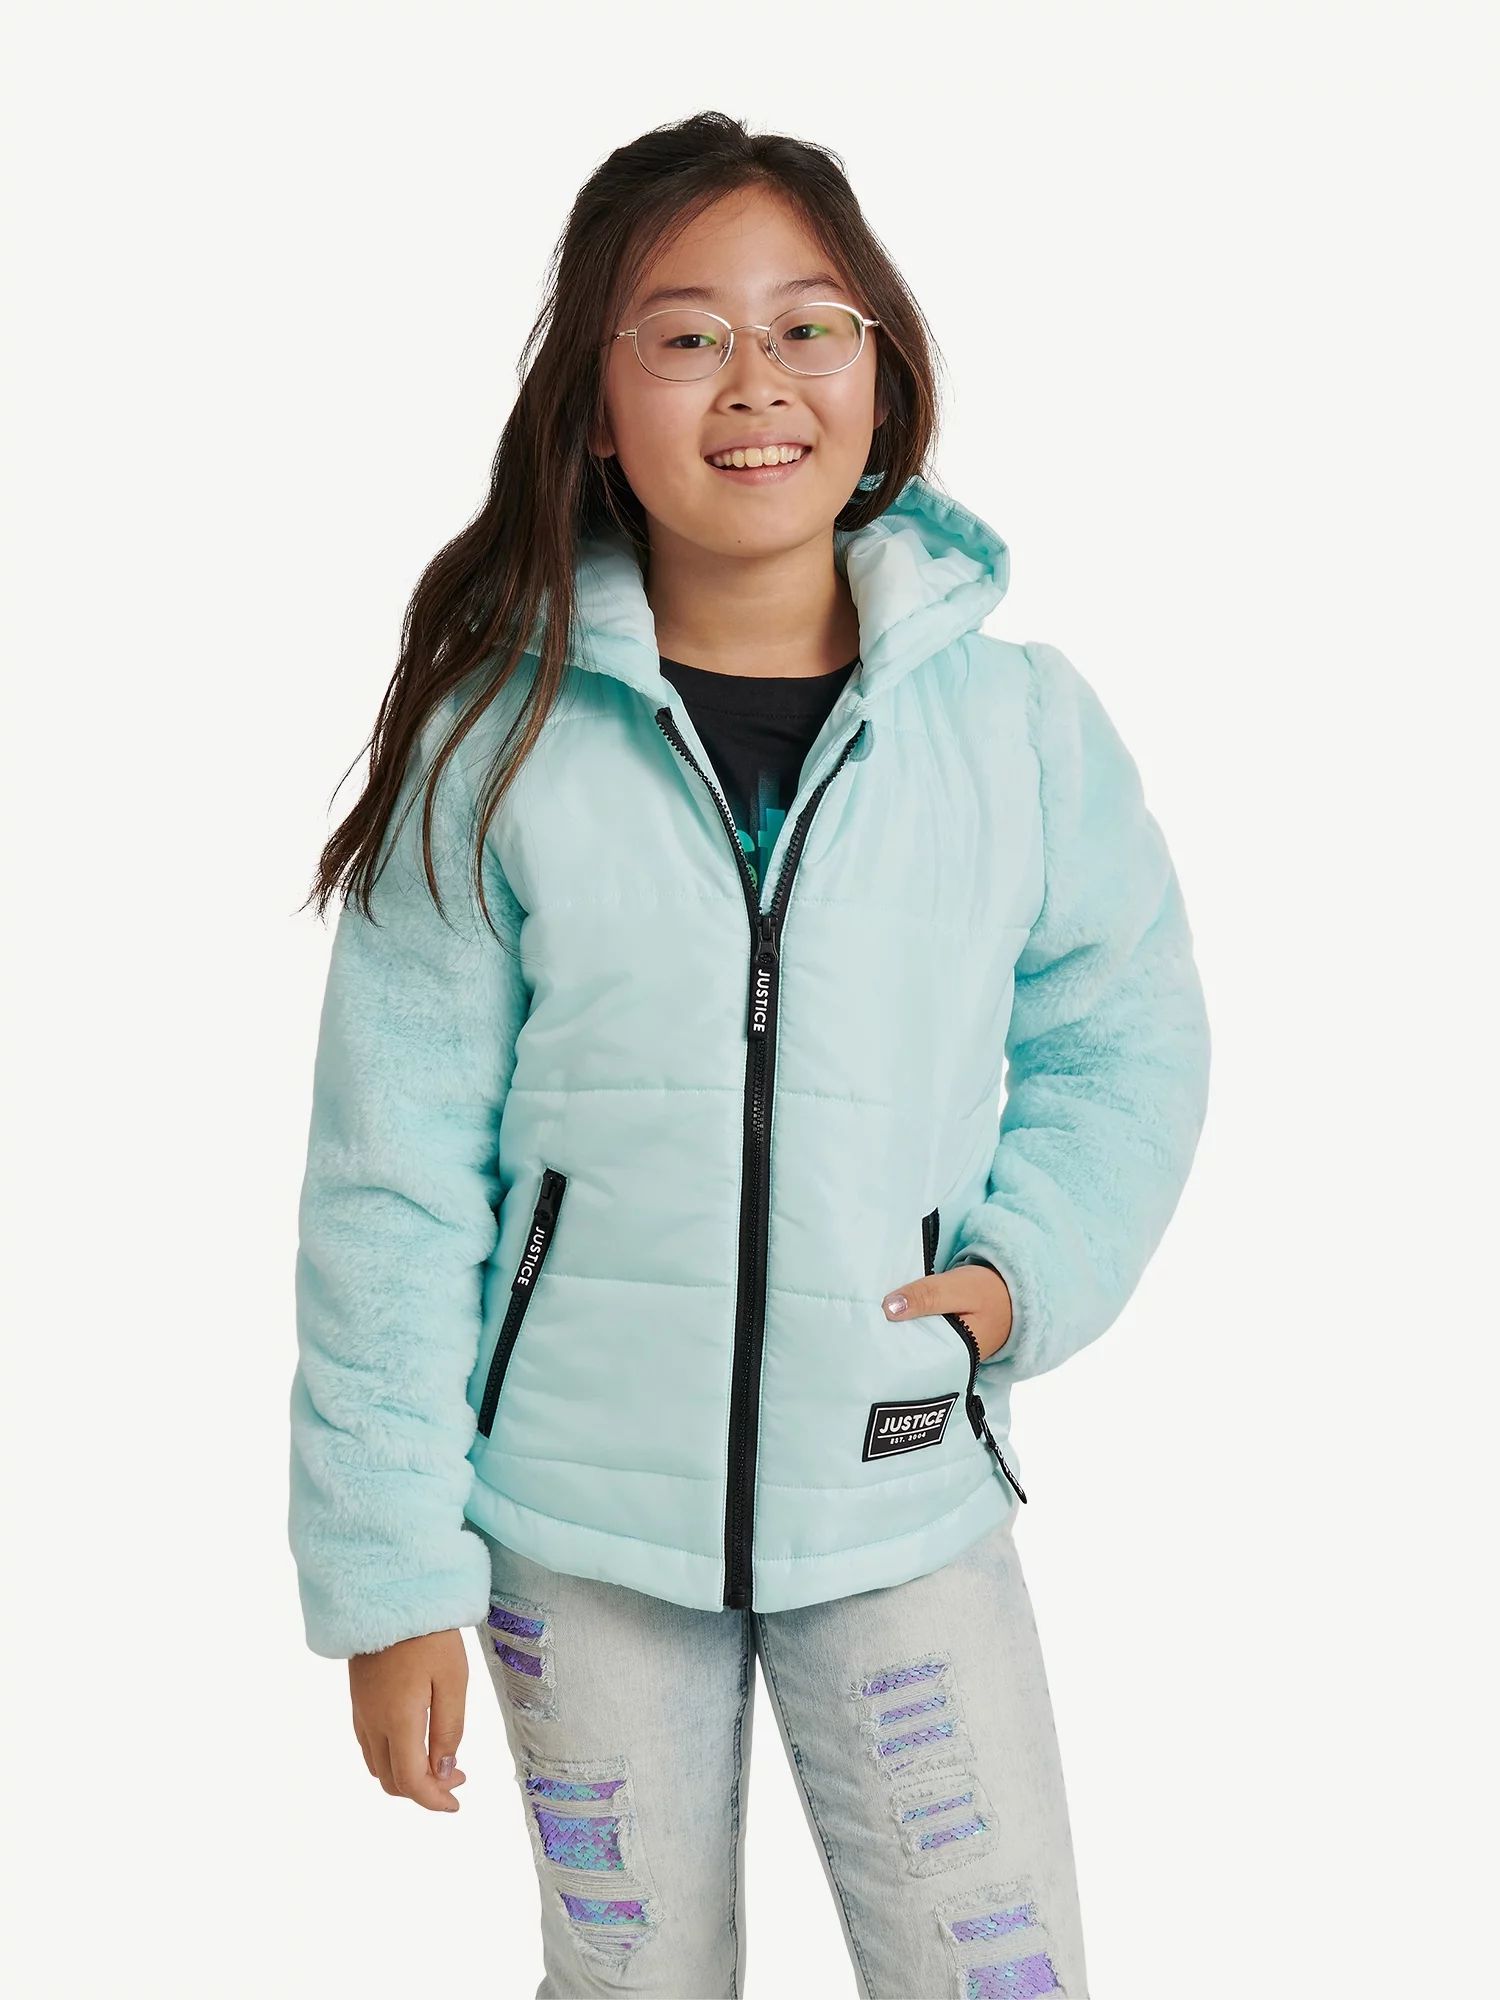 Justice Girls Full Zip Long Sleeve Mixed Media Jacket with Hood, Sizes 5-18 | Walmart (US)